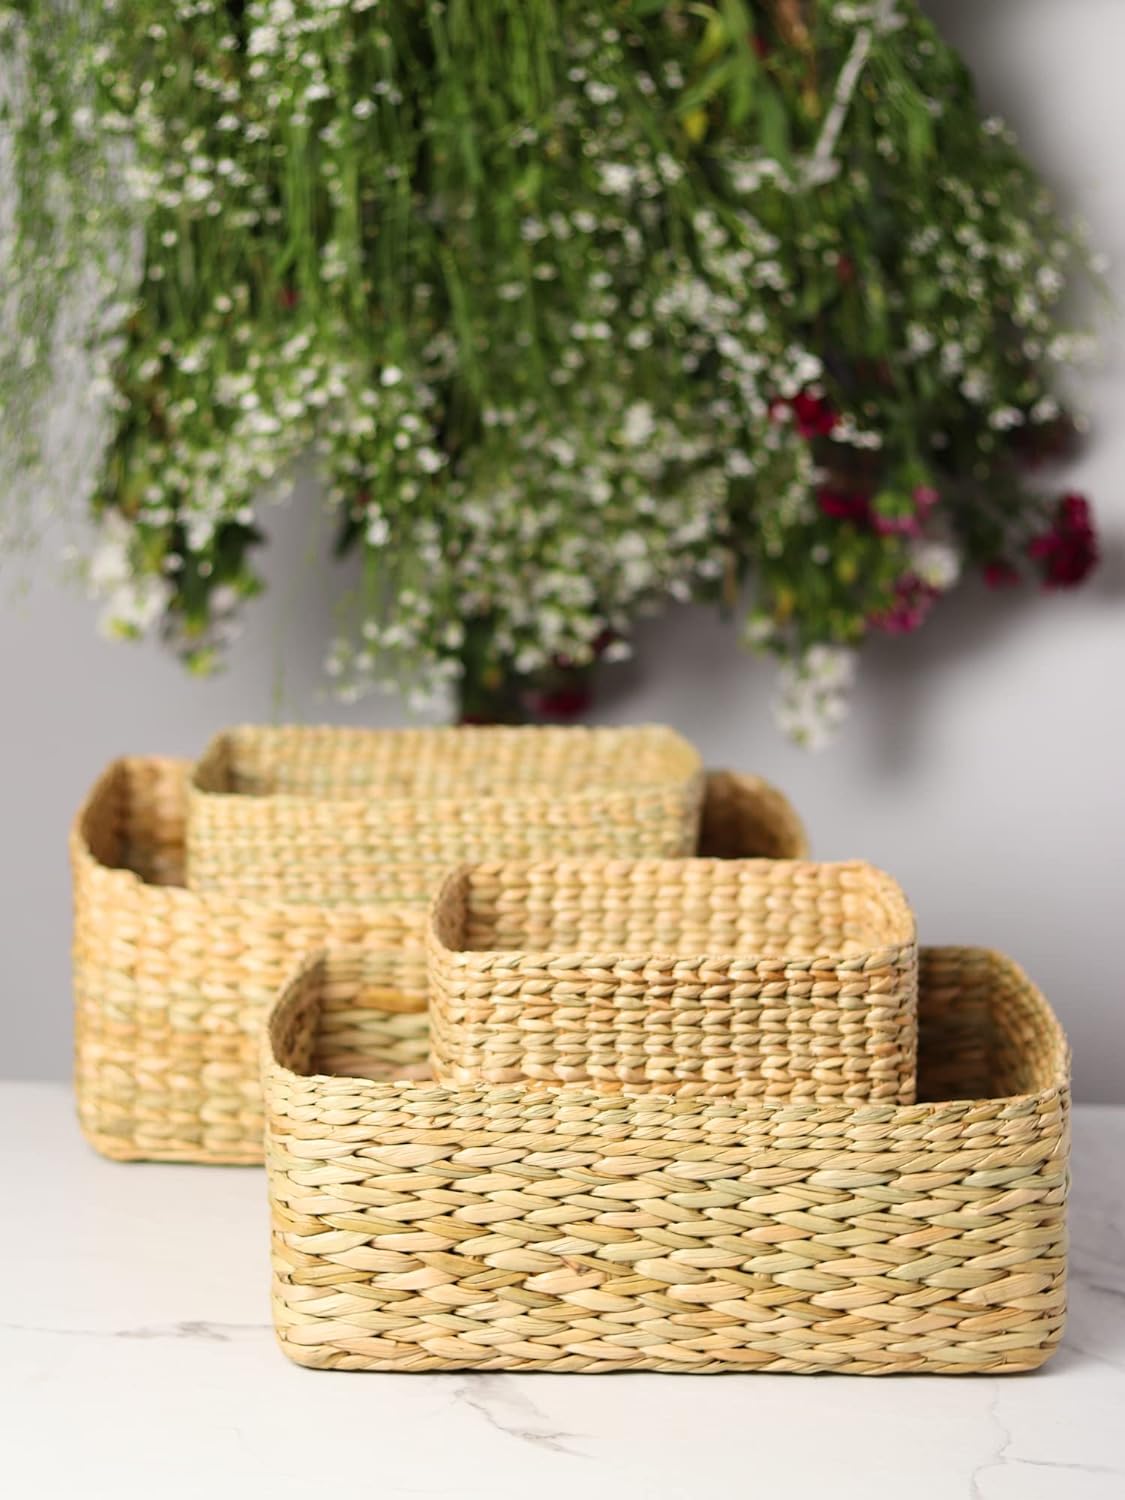 India Storage Baskets Cane or Bamboo Basket Tray Online Basket Wardrobe Basket (Set of All 4 (S,M,L,X-Large))